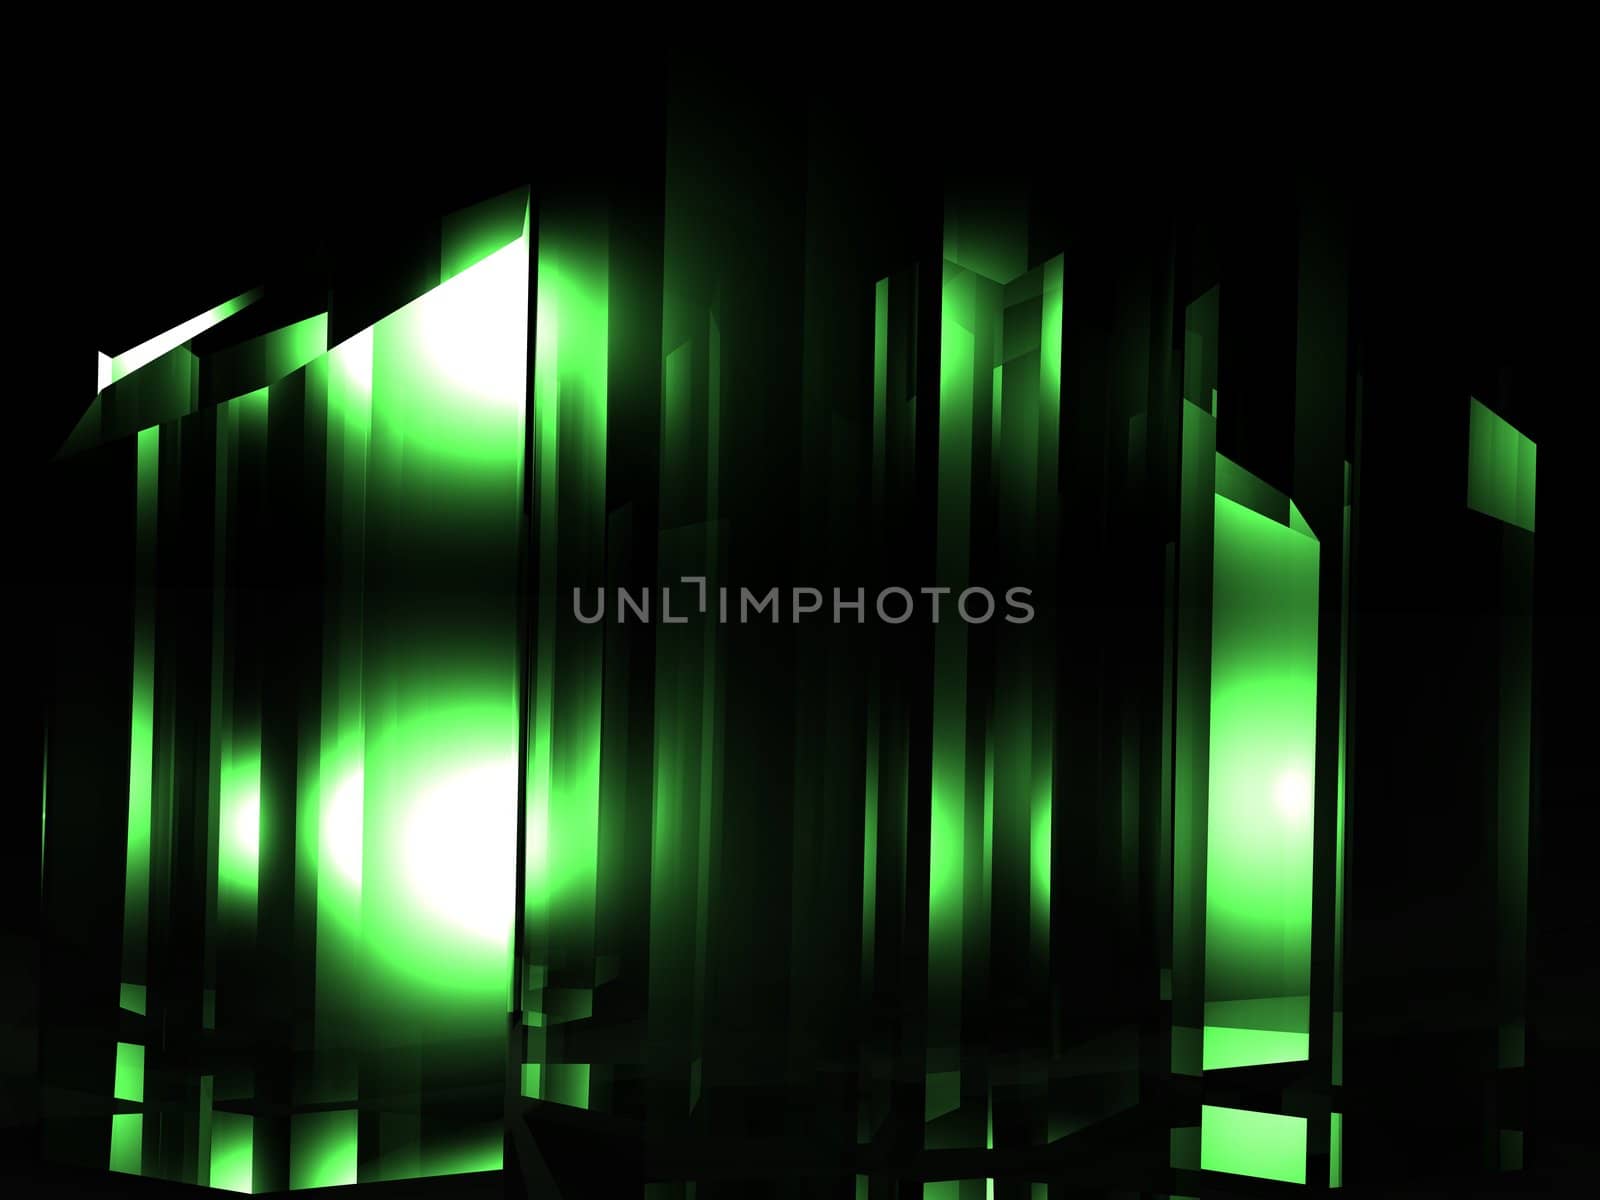 Illustration of a green crystal or kryptonite substance.